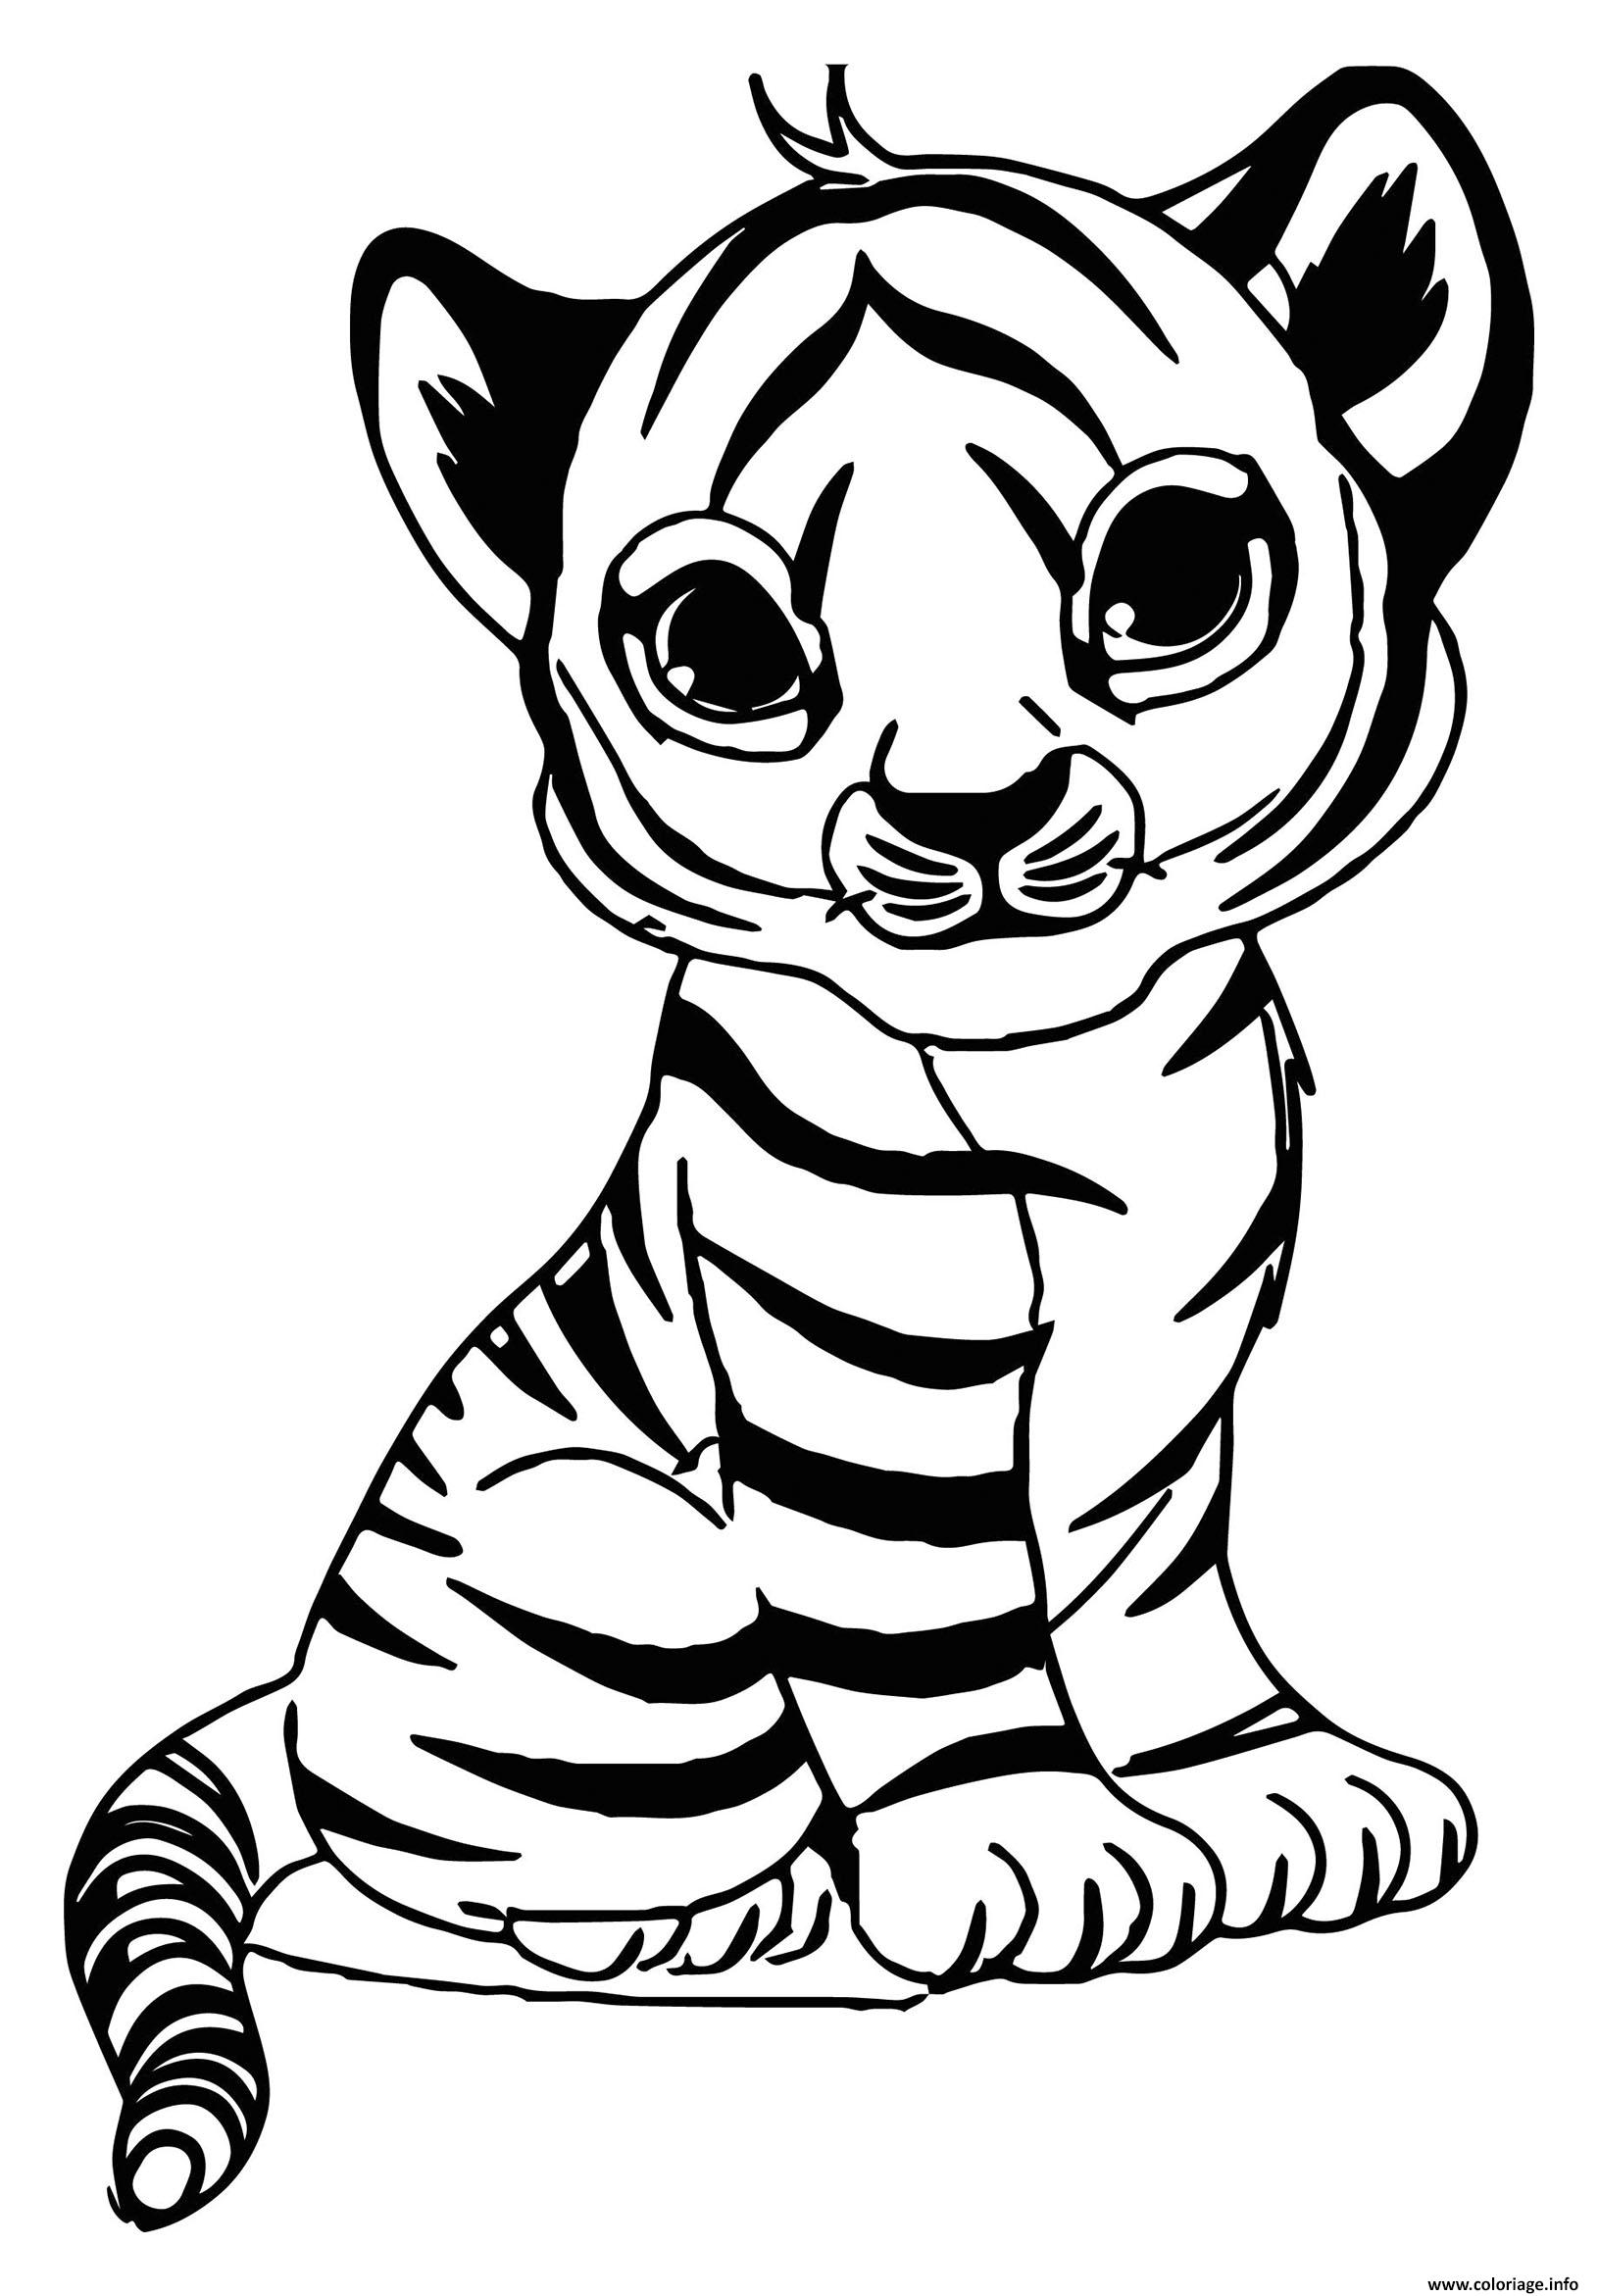 Coloriage Un Bebe Tigre Felin Avec Fourrure Jaune Rayee De Noir Dessin Animaux De La Jungle A Imprimer